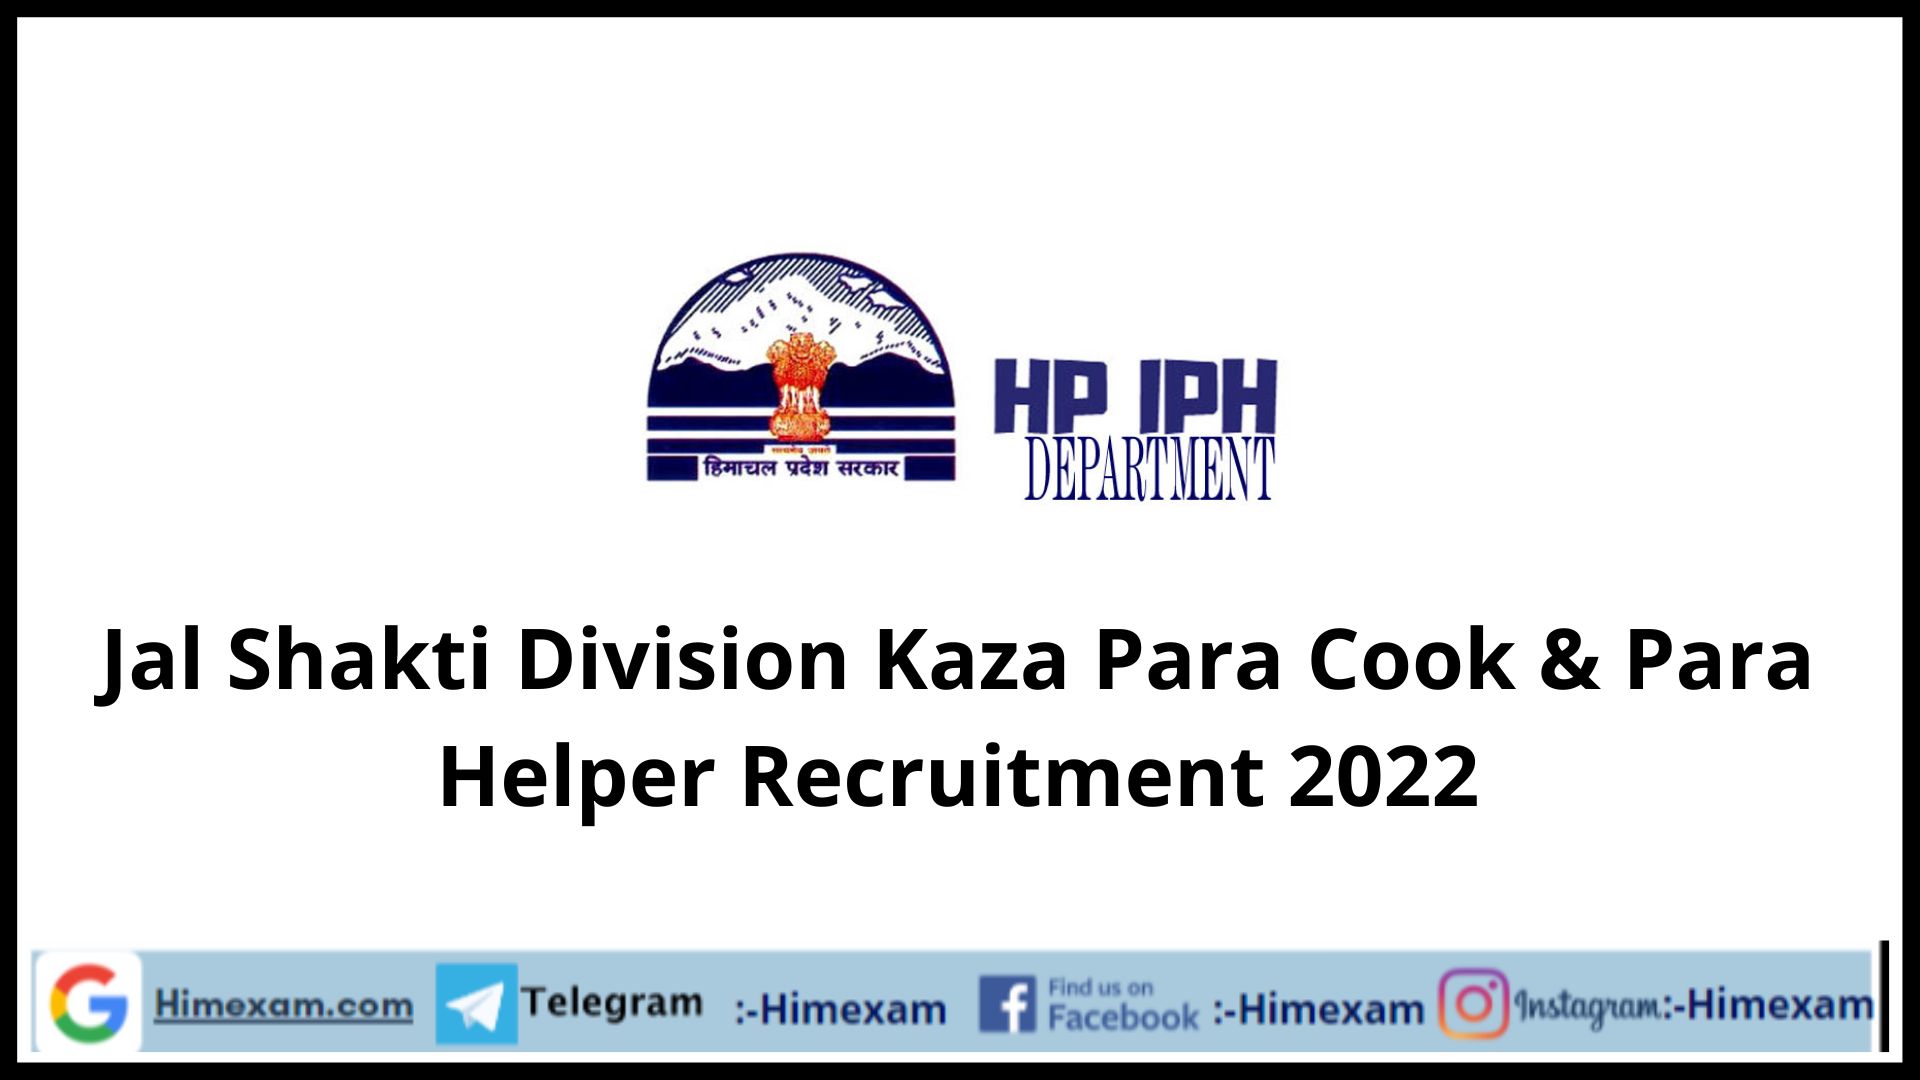 Jal Shakti Division Kaza Para Cook & Para Helper Recruitment 2022